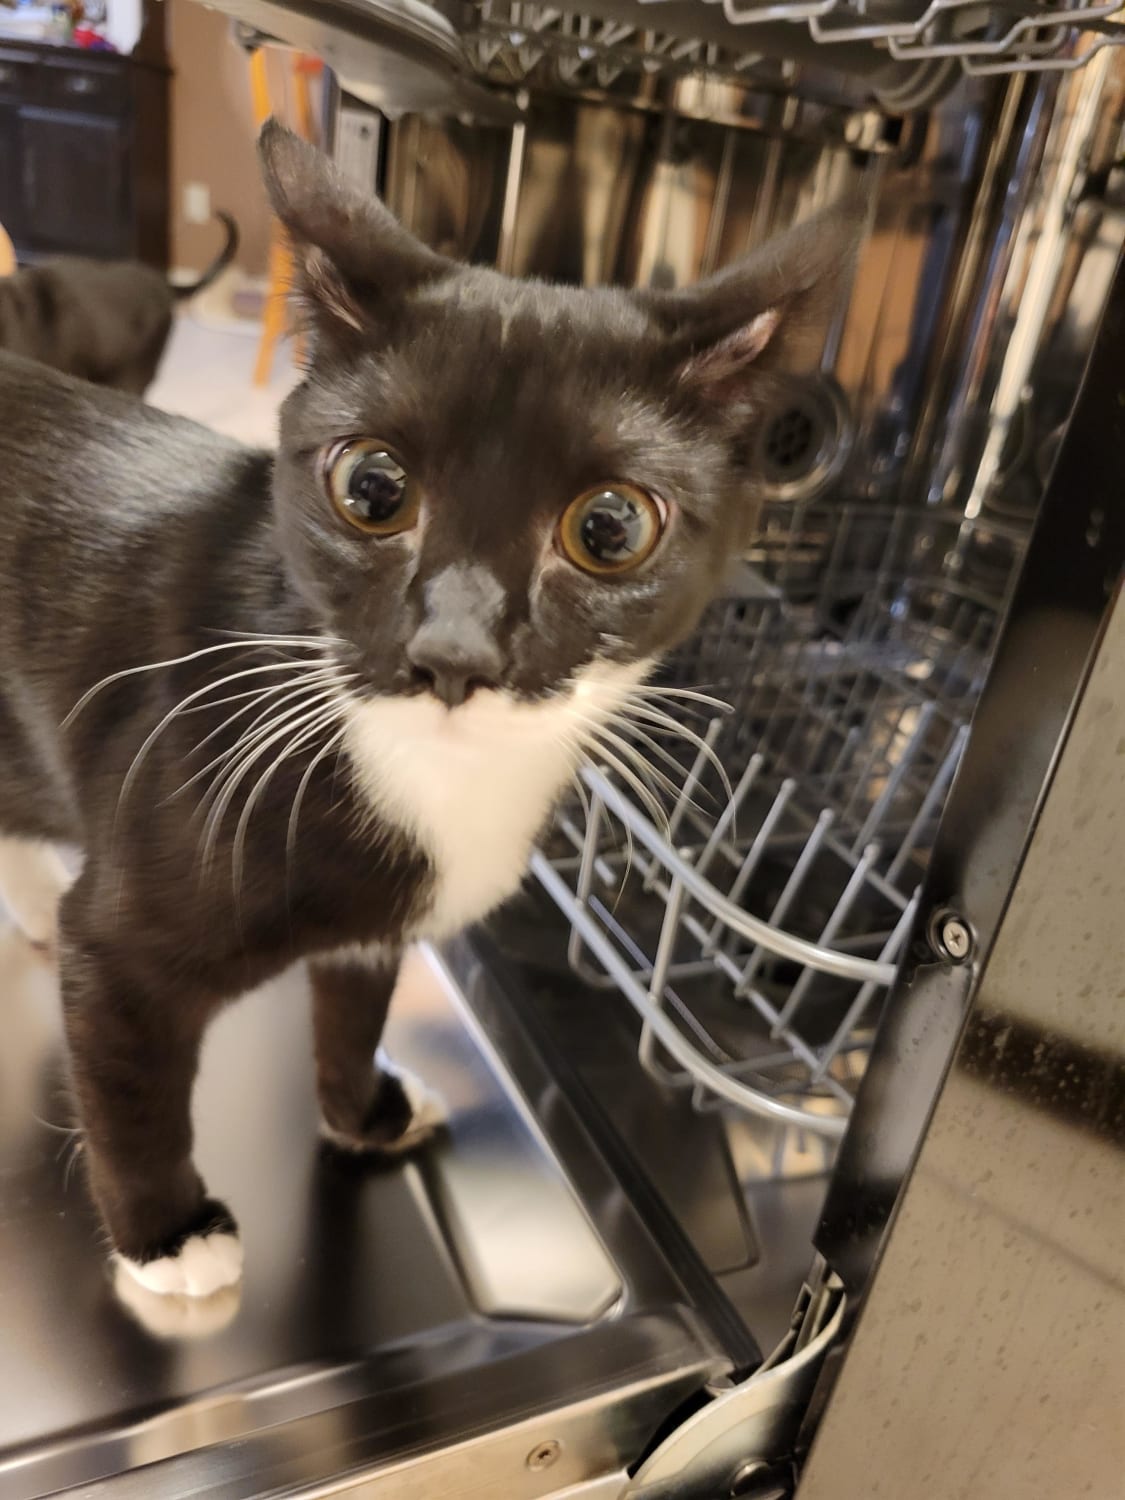 My dishwasher inspector seems a little... catty